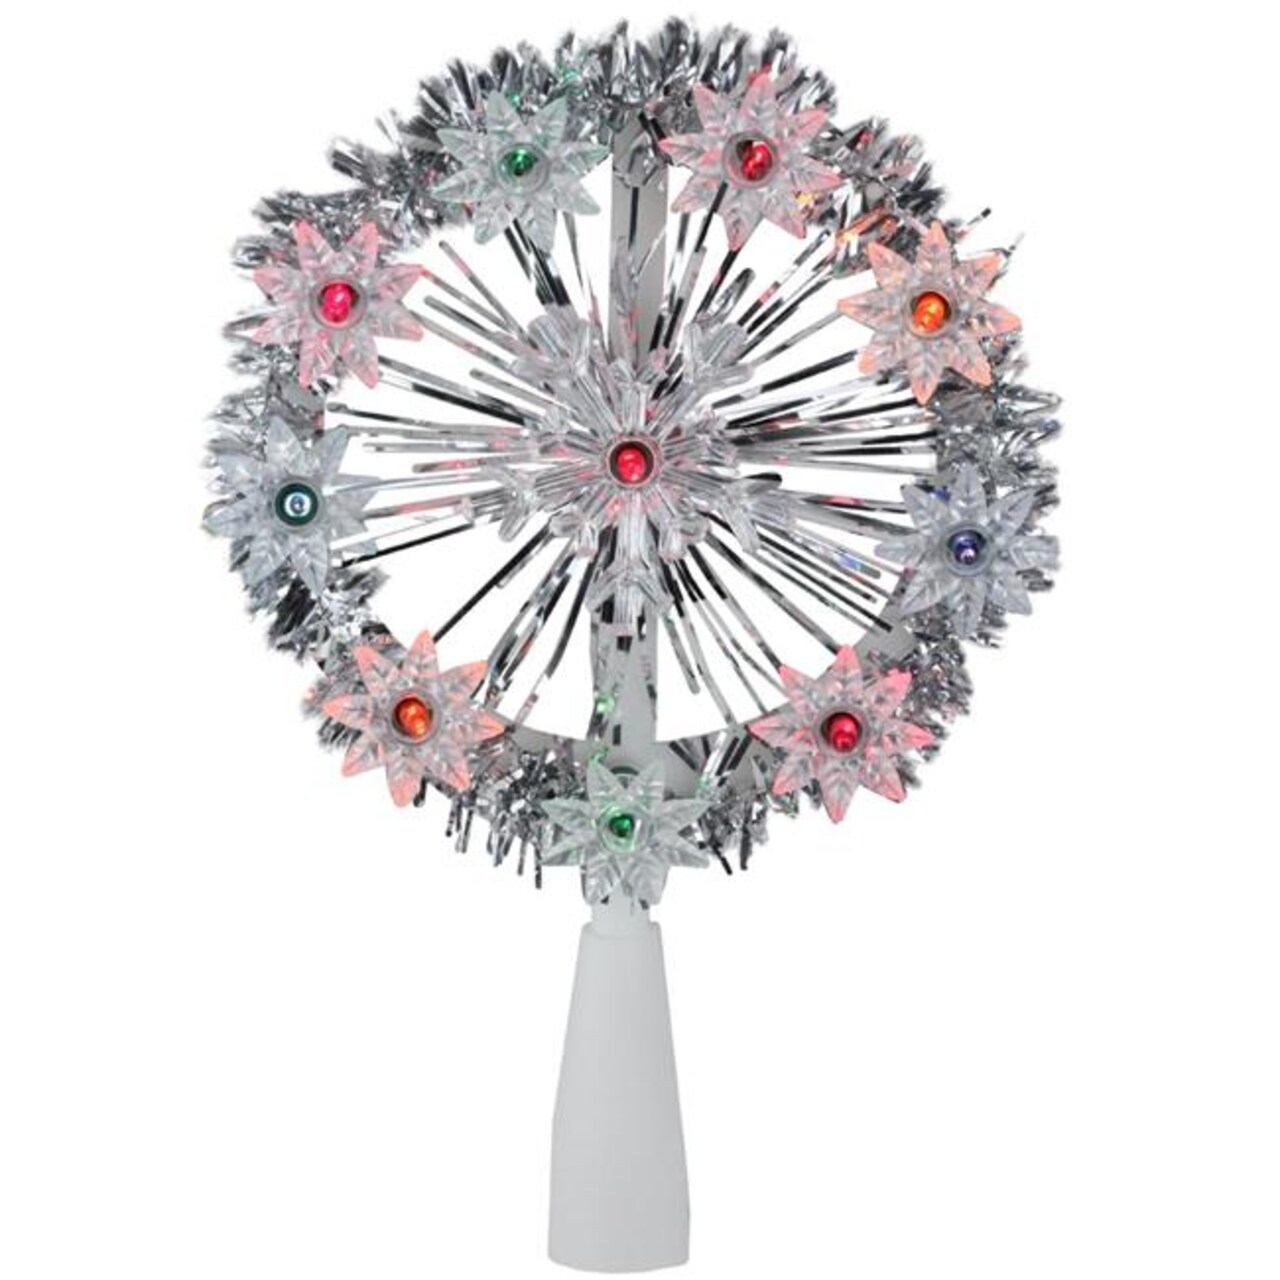 Northlight 32606339 7 in. Silver Tinsel Snowflake Starburst Christmas Tree Topper - Multi Lights